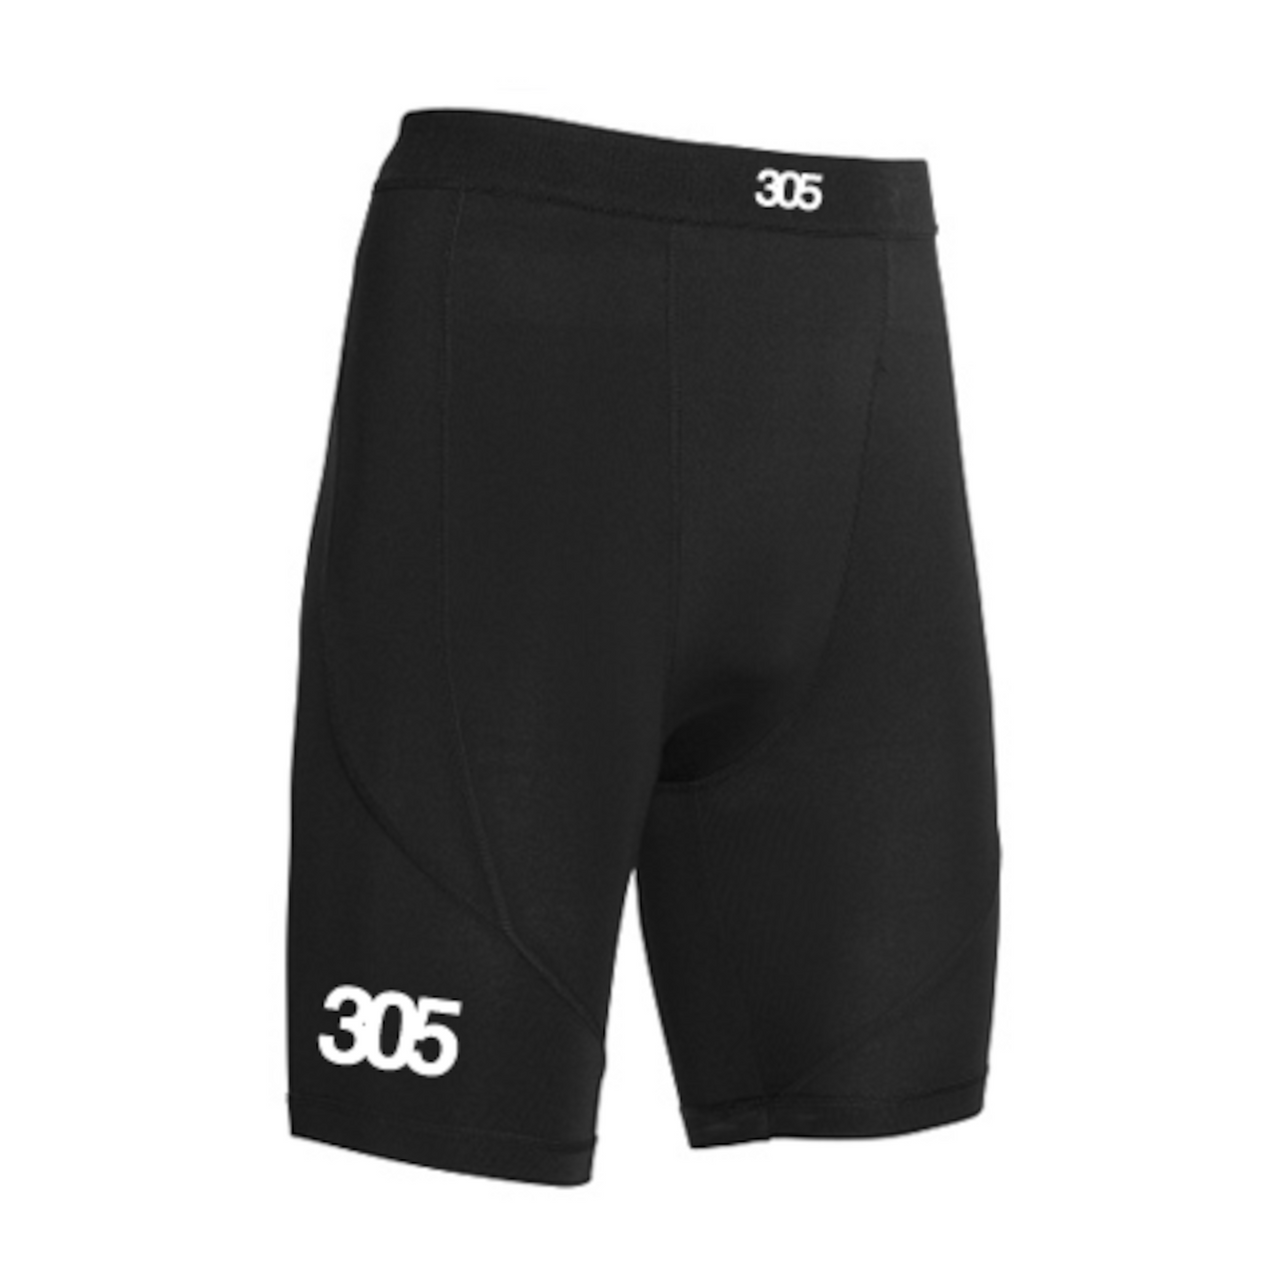 305 Performance Baselayer Shorts